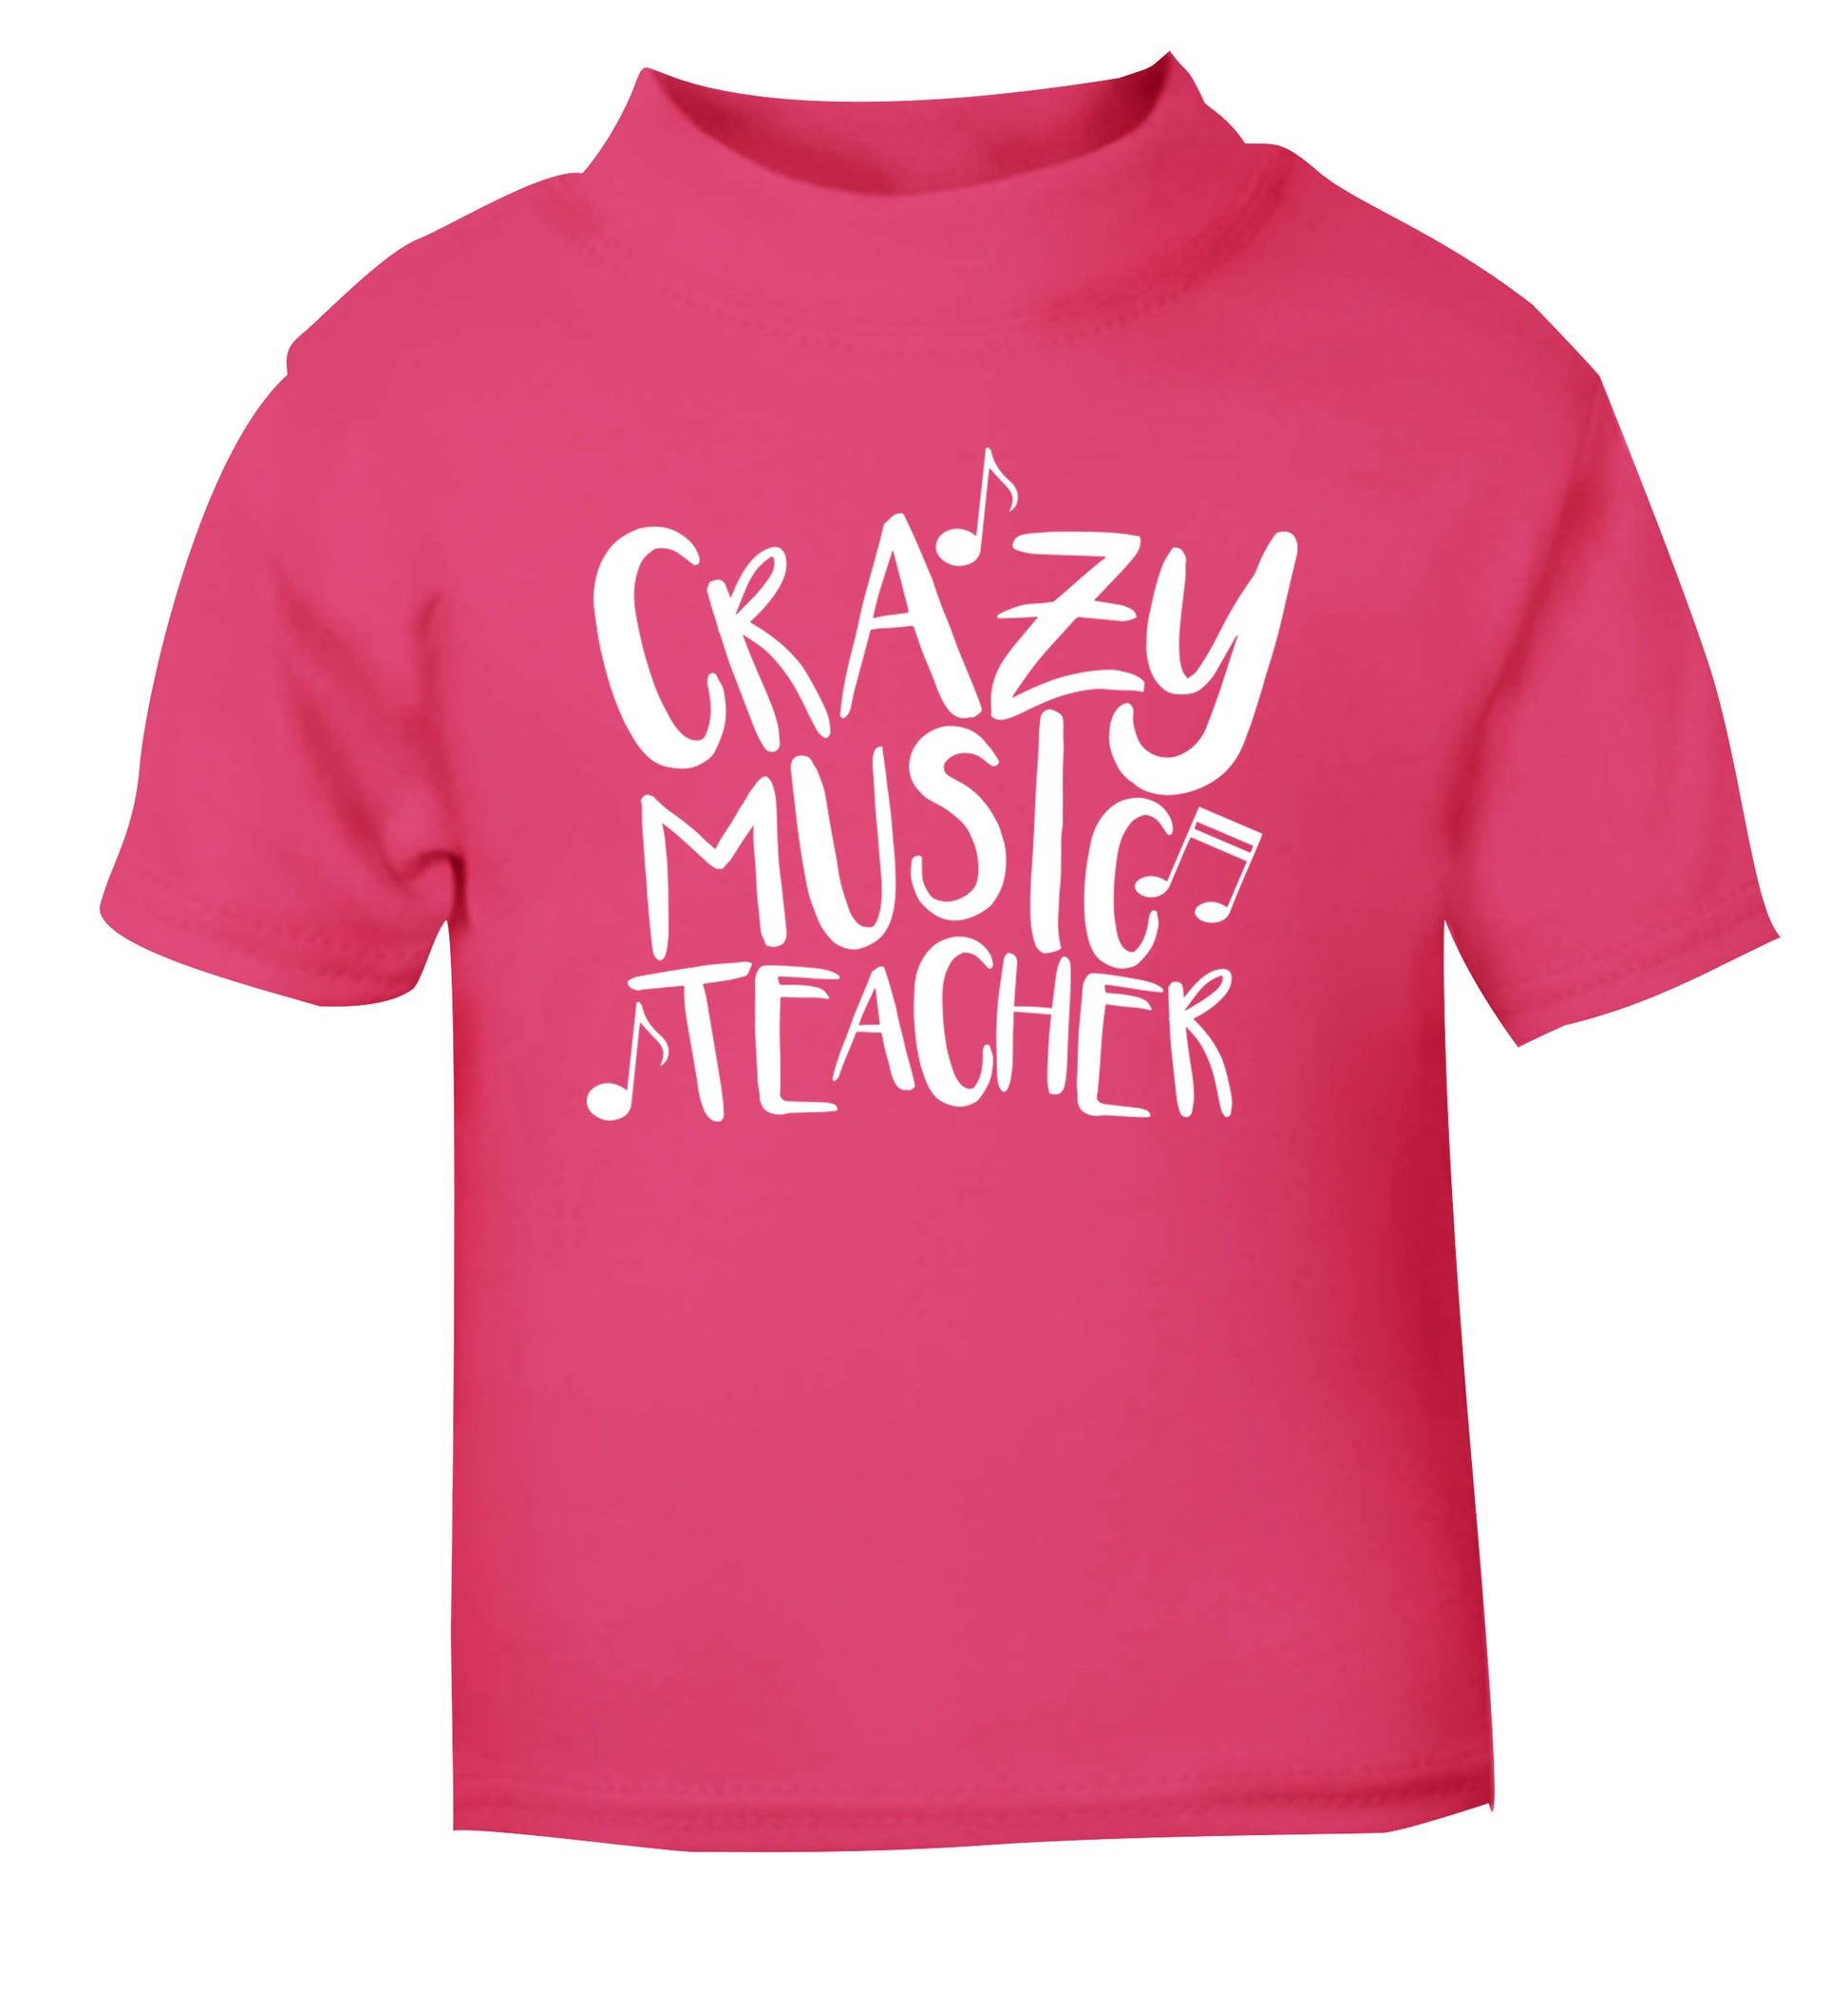 Crazy music teacher pink Baby Toddler Tshirt 2 Years